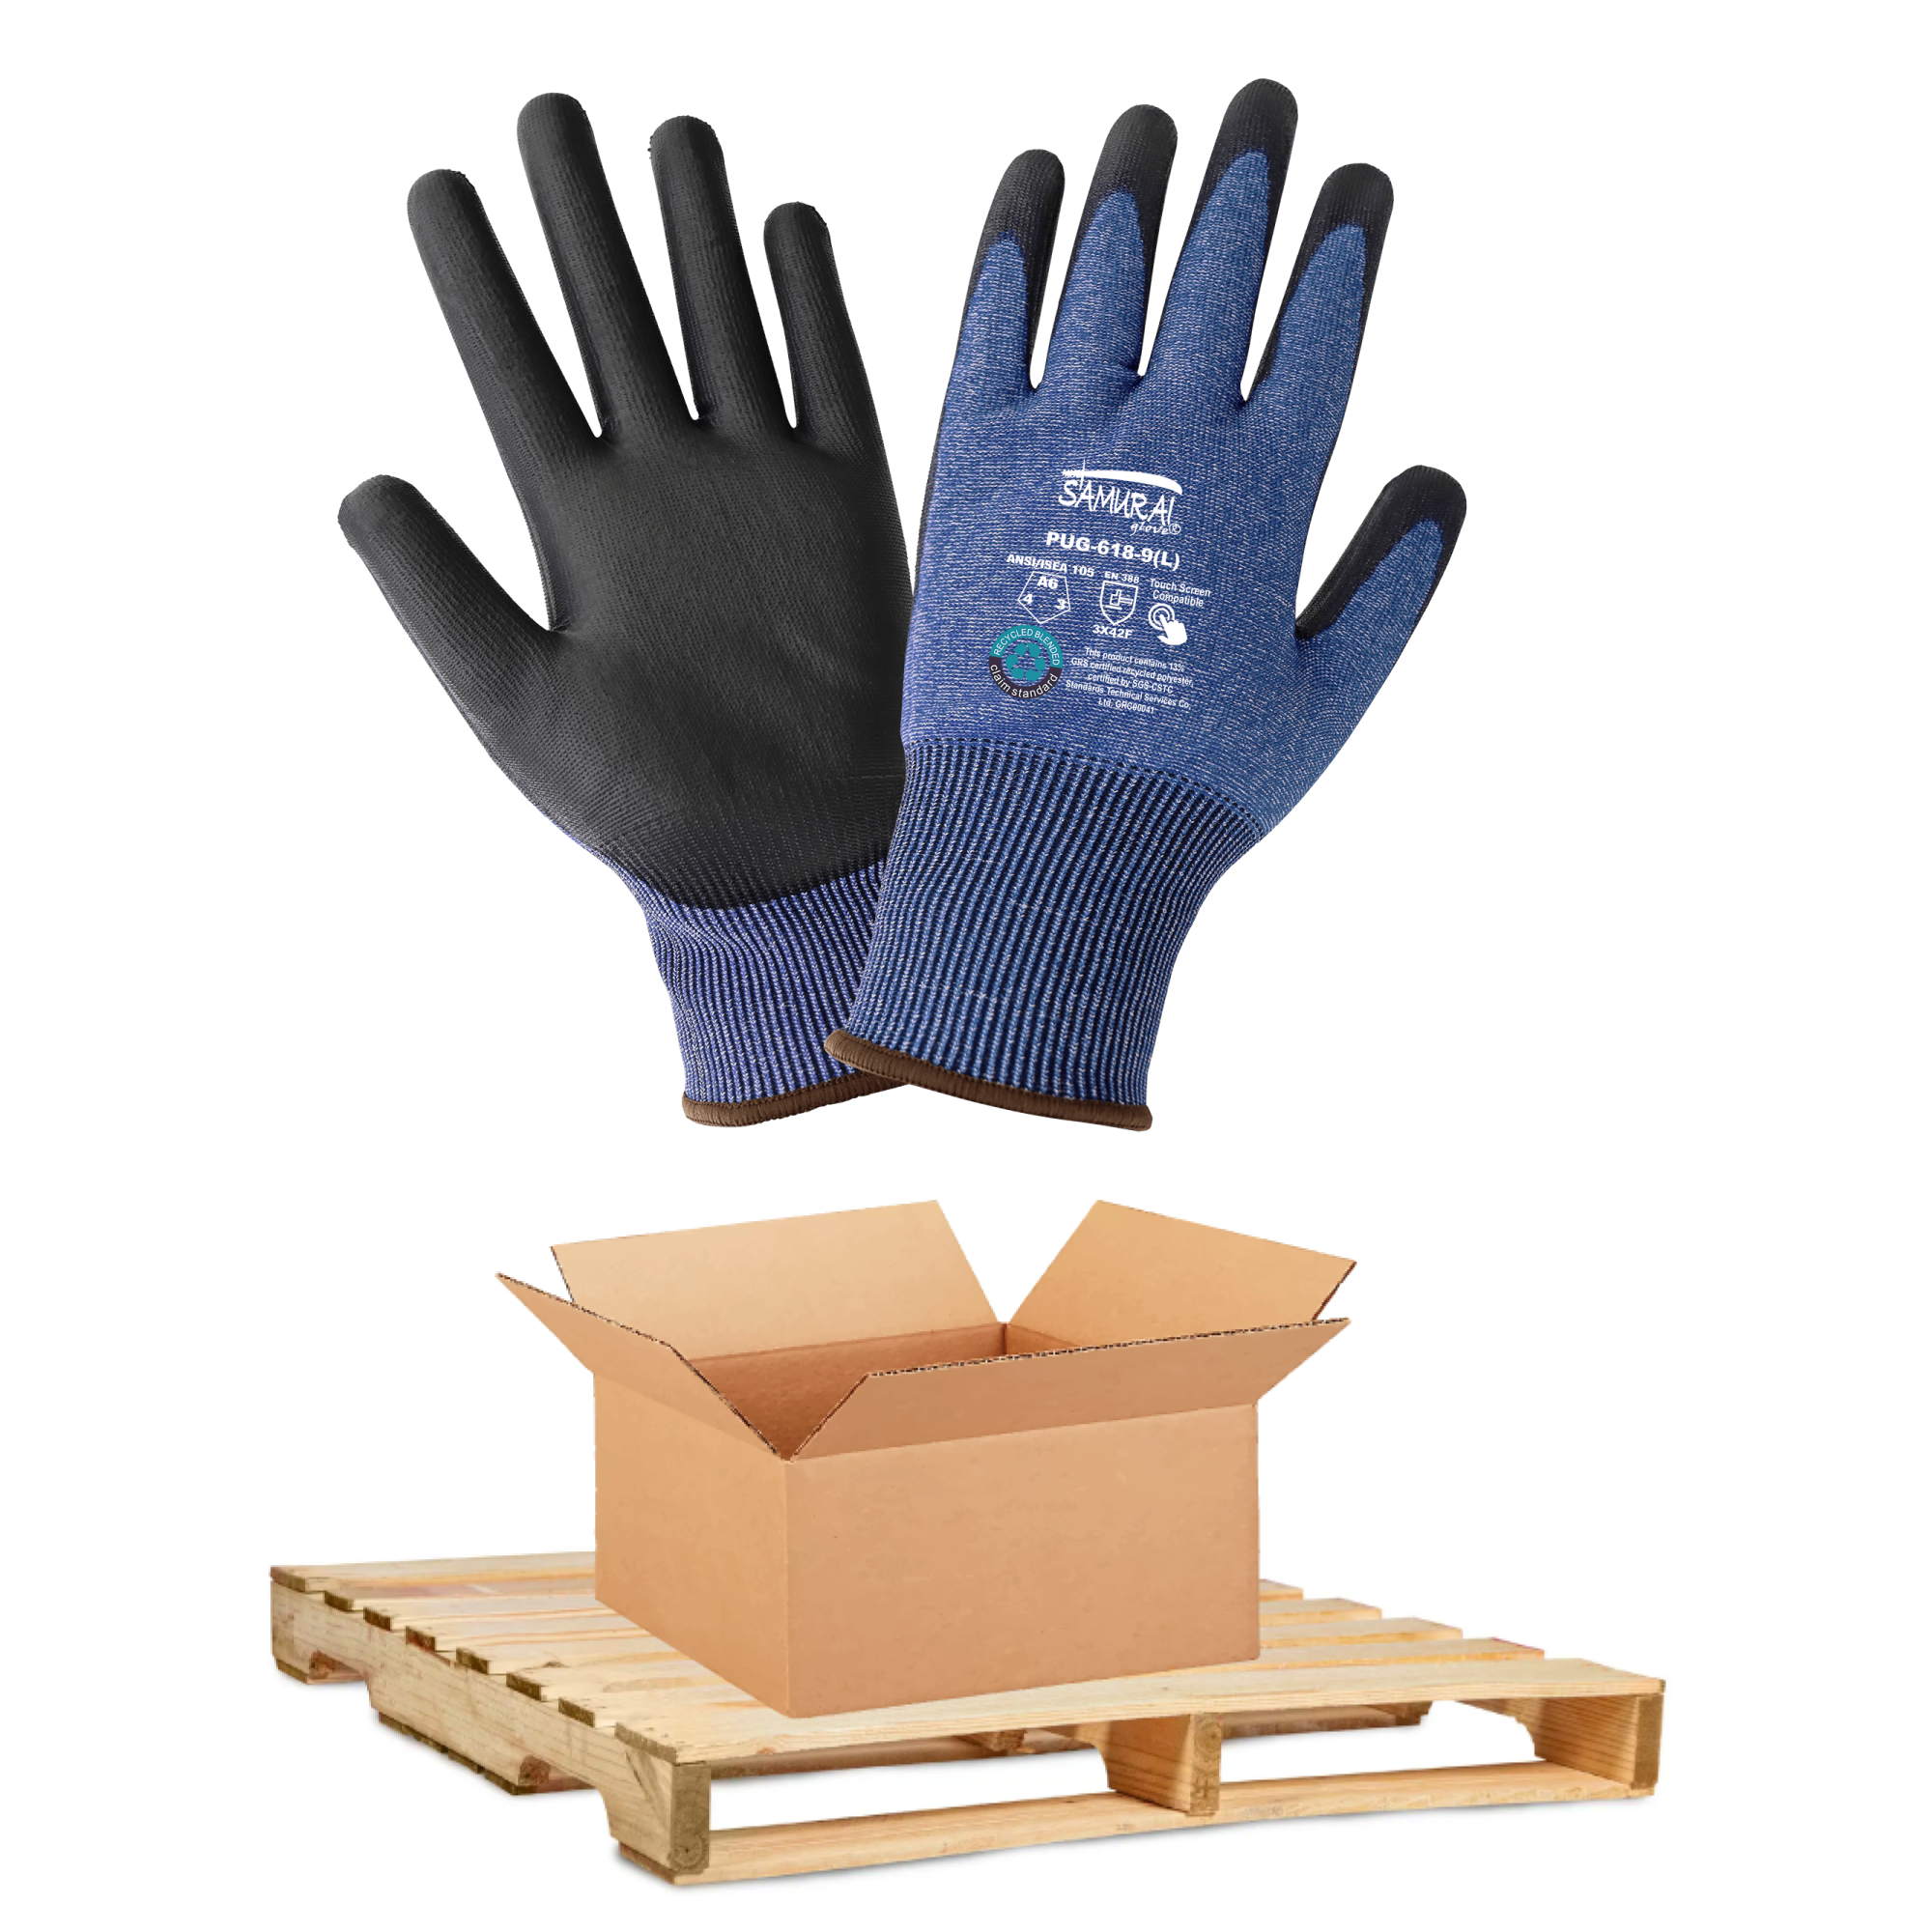 BULK, Global Glove & Safety PUG-618, 18-Gauge, Polyurethane Palm